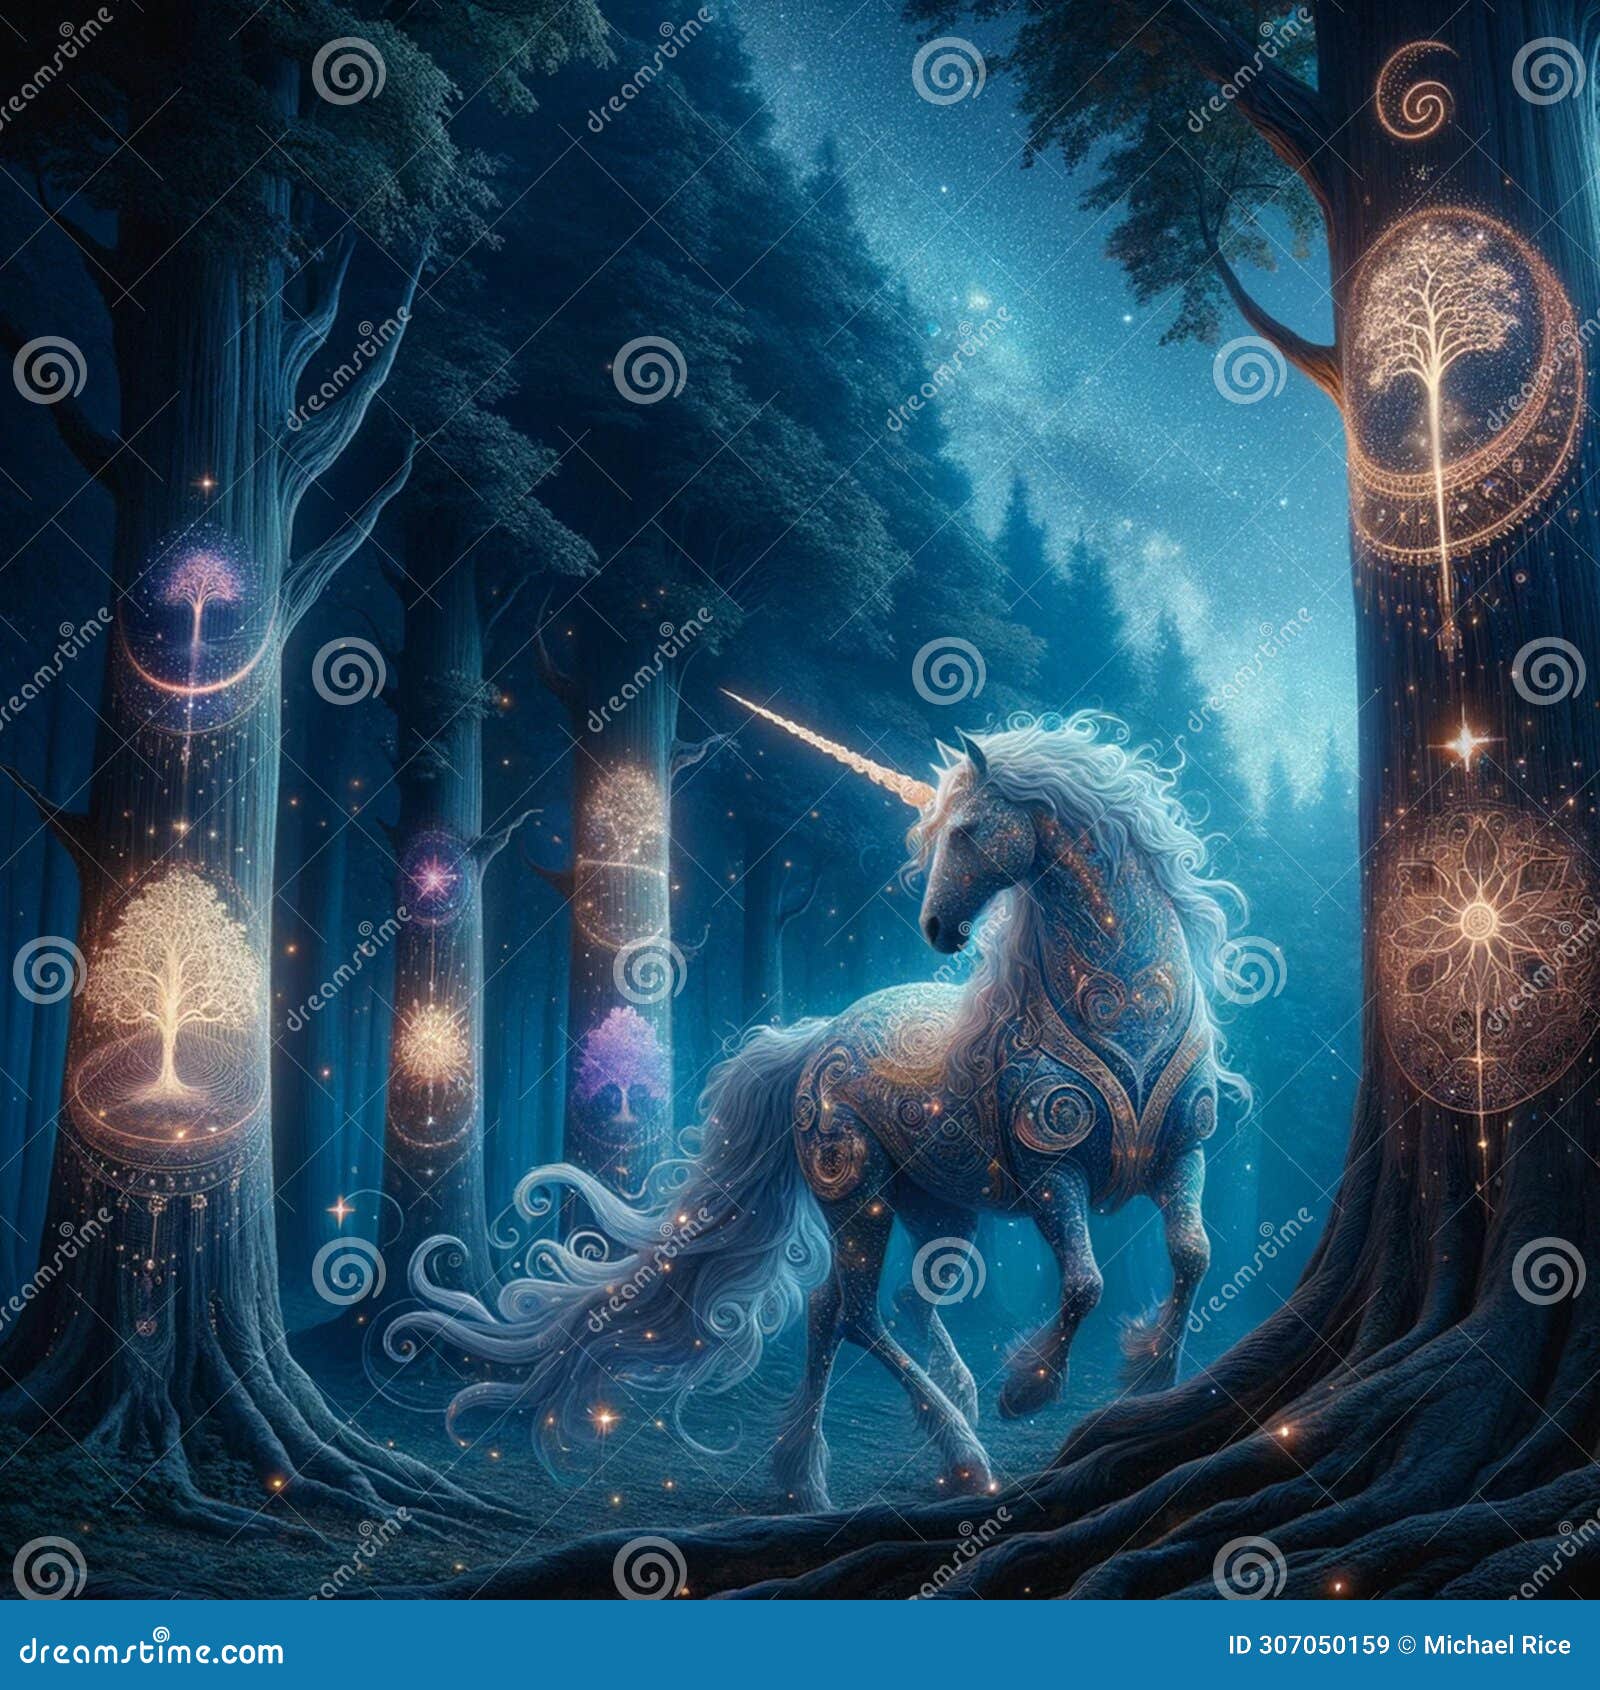 mystical s: ai generated unicorn amid glowing forest enigma